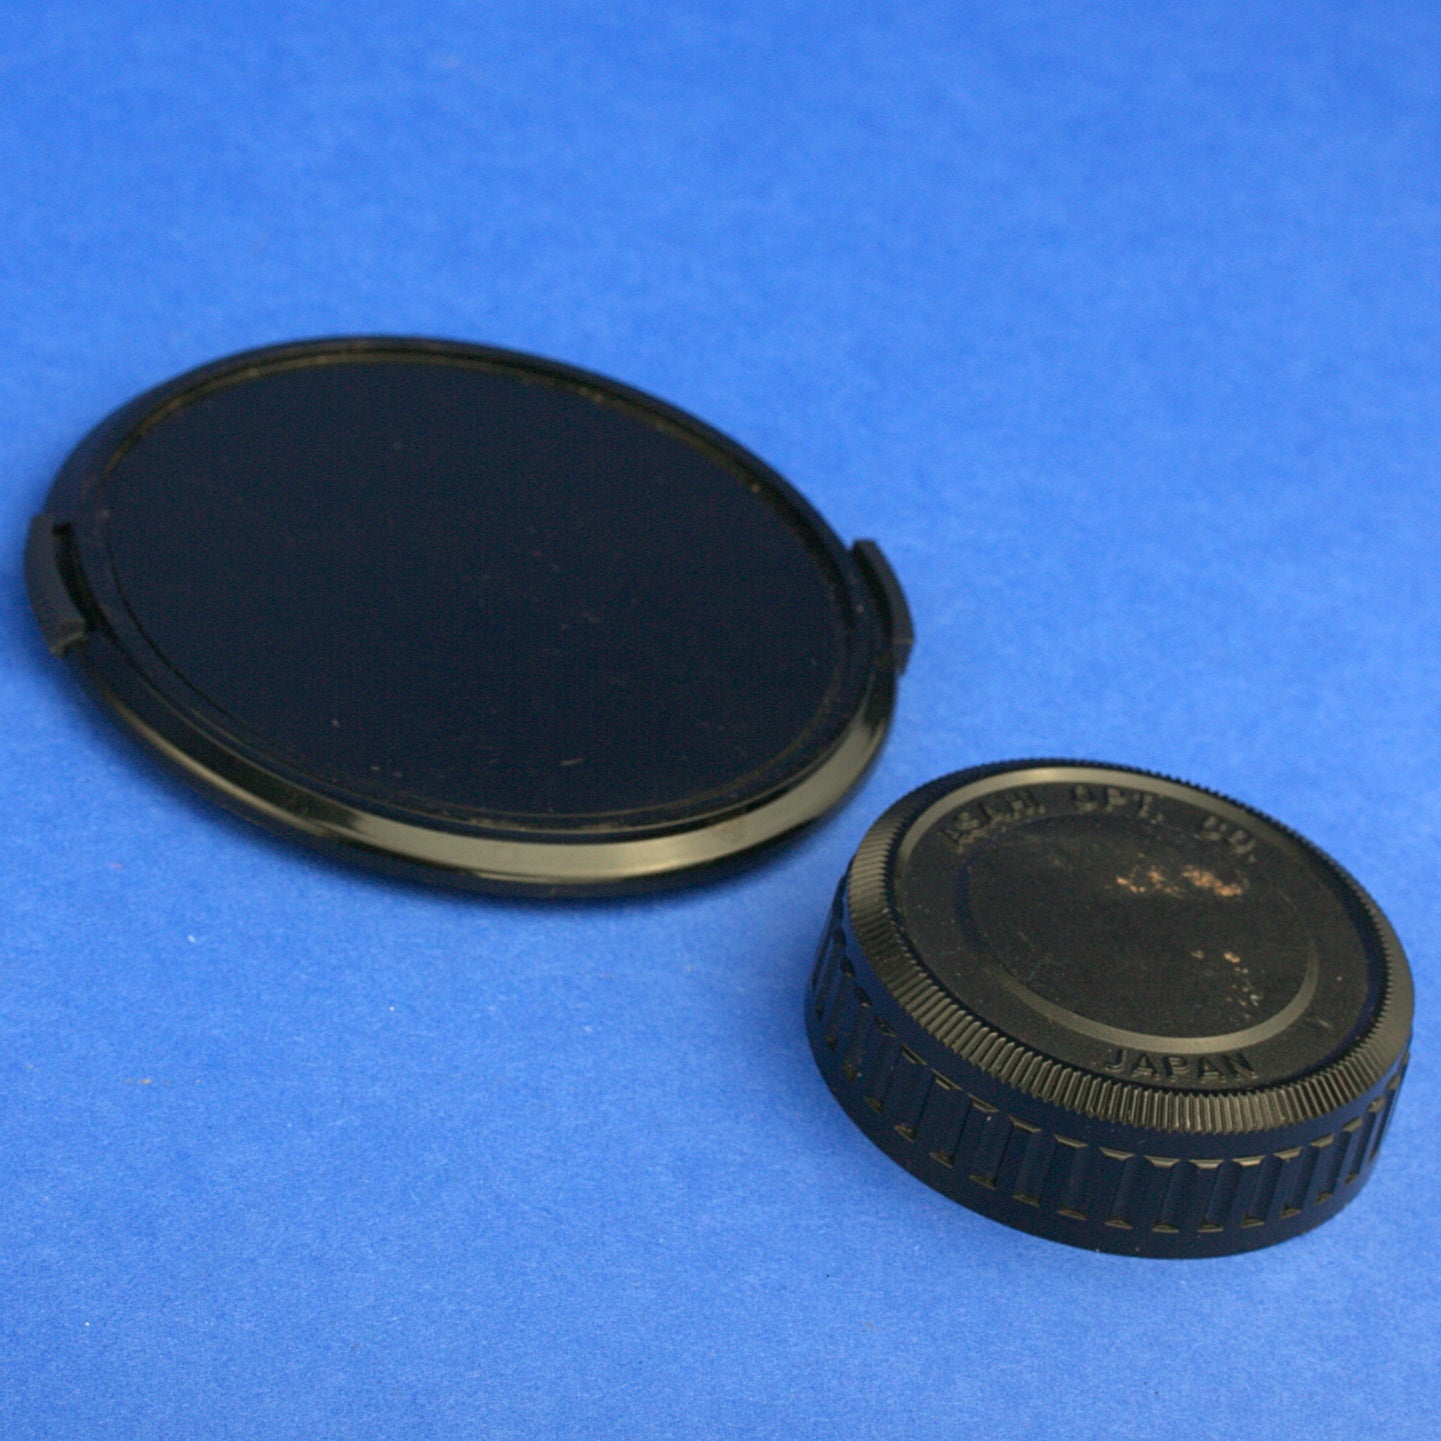 Pentax-A 28-135mm F4 SMC Lens